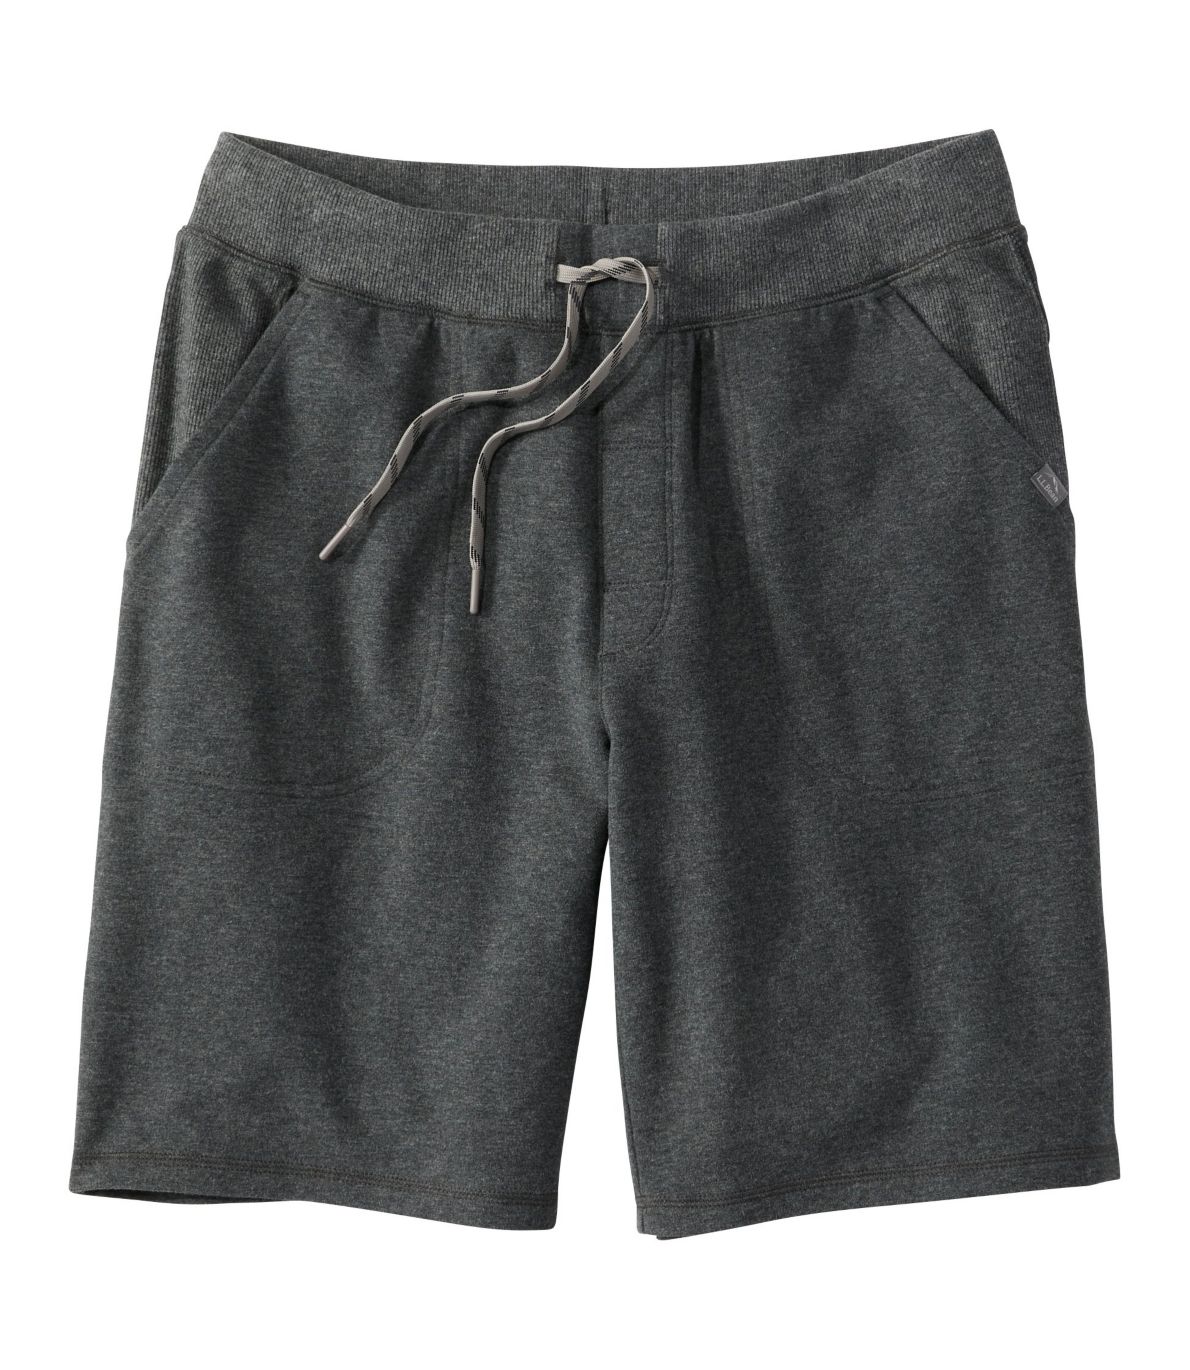 Men's Bean's Comfort Camp Knit Shorts, 9"